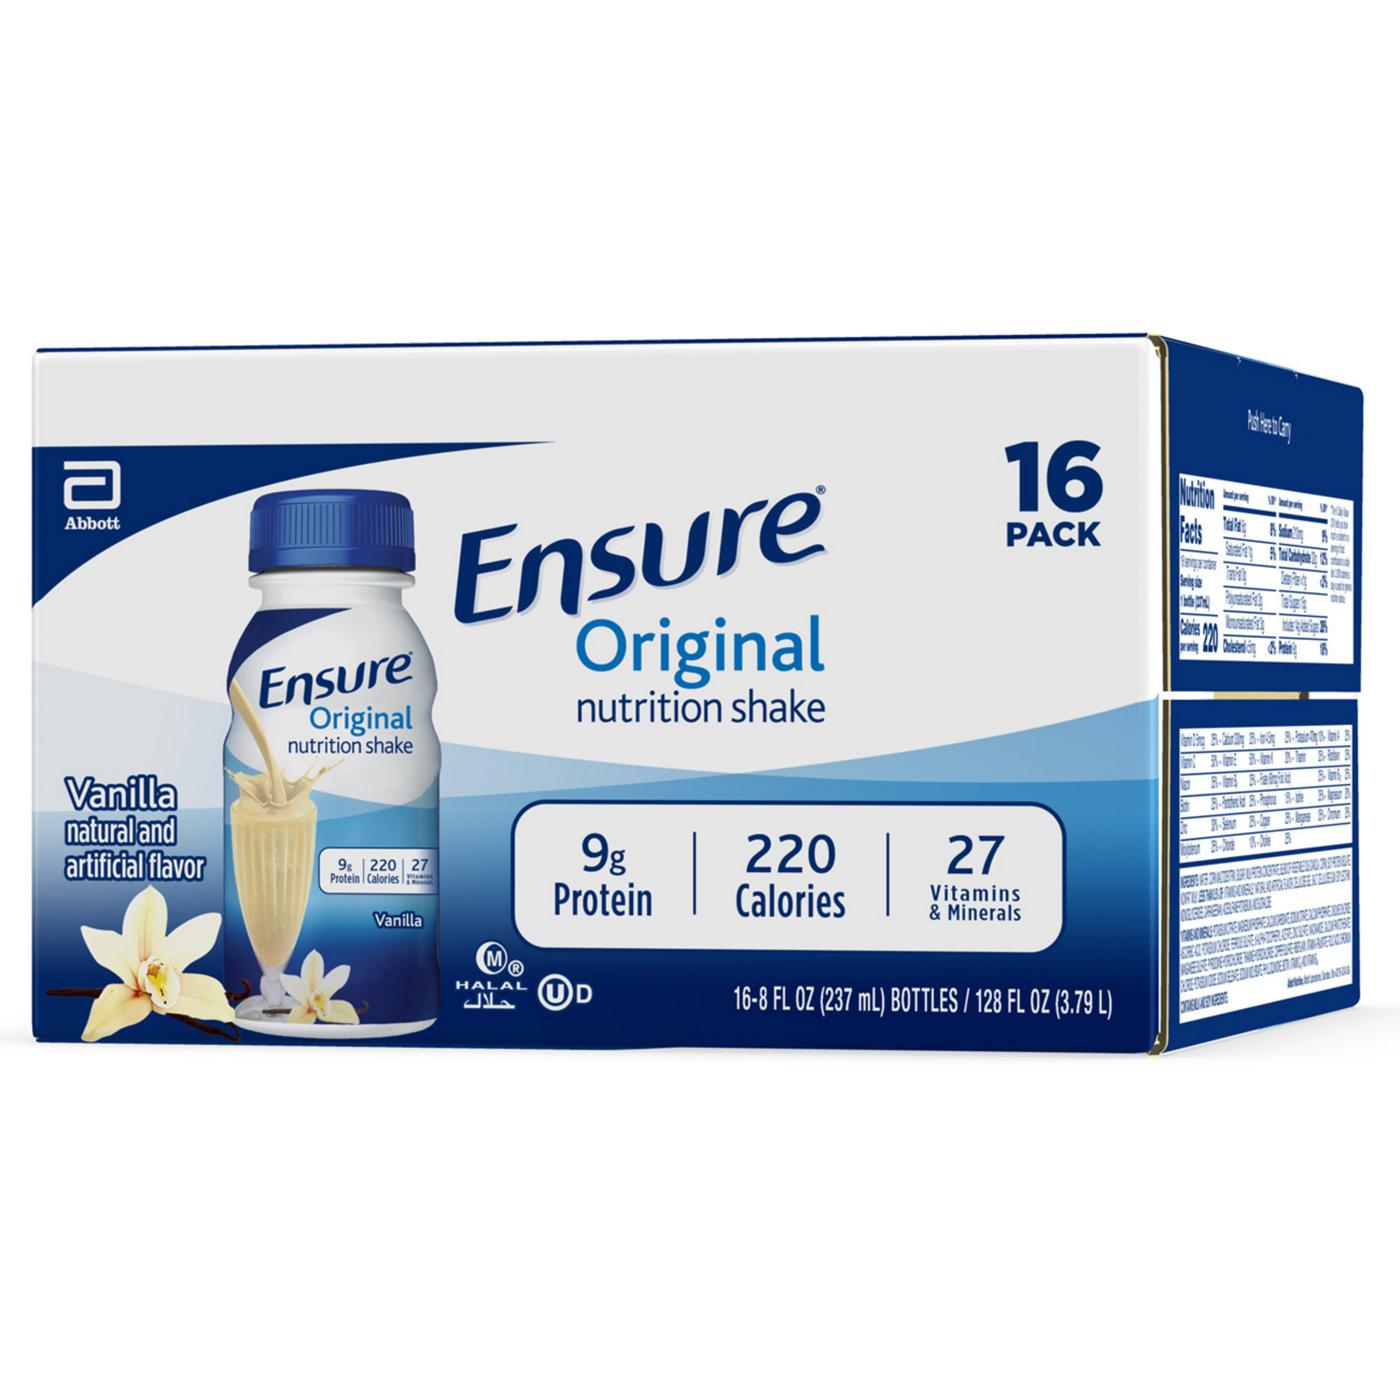 Ensure Original Nutrition Shake - Vanilla; image 5 of 8